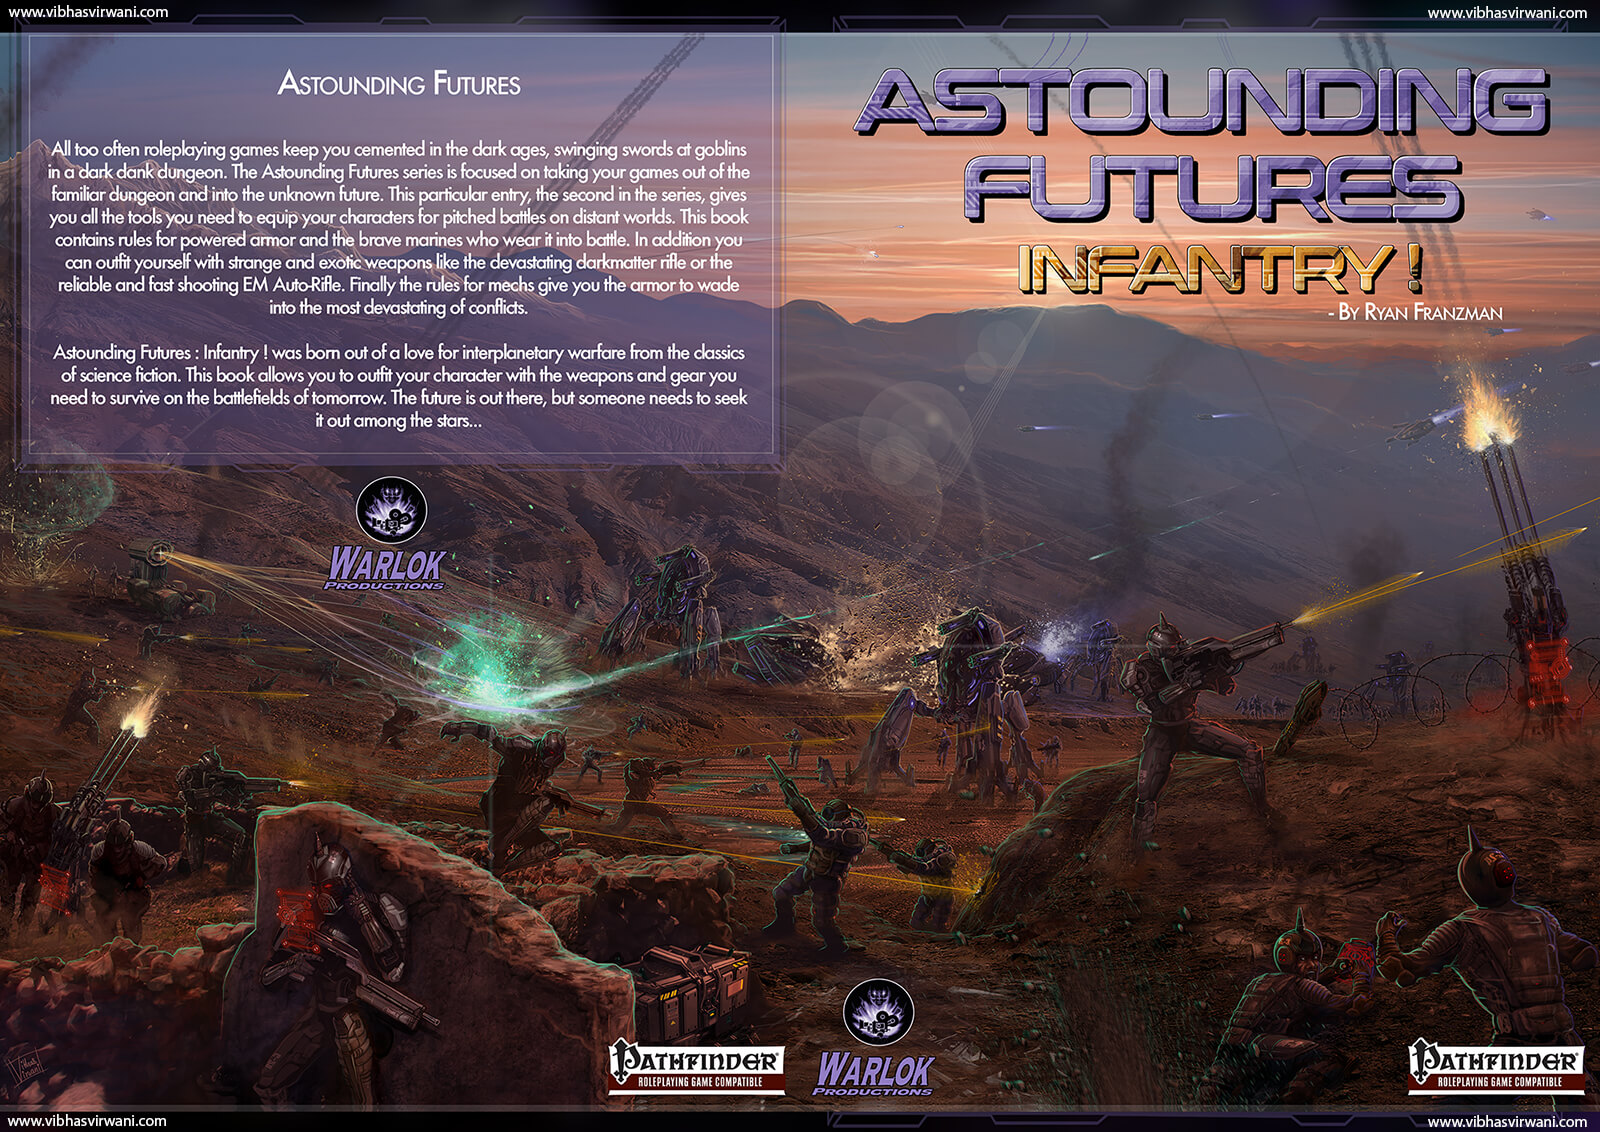 astounding futures infantry vol2 book cover by vibhas virwani.jpg